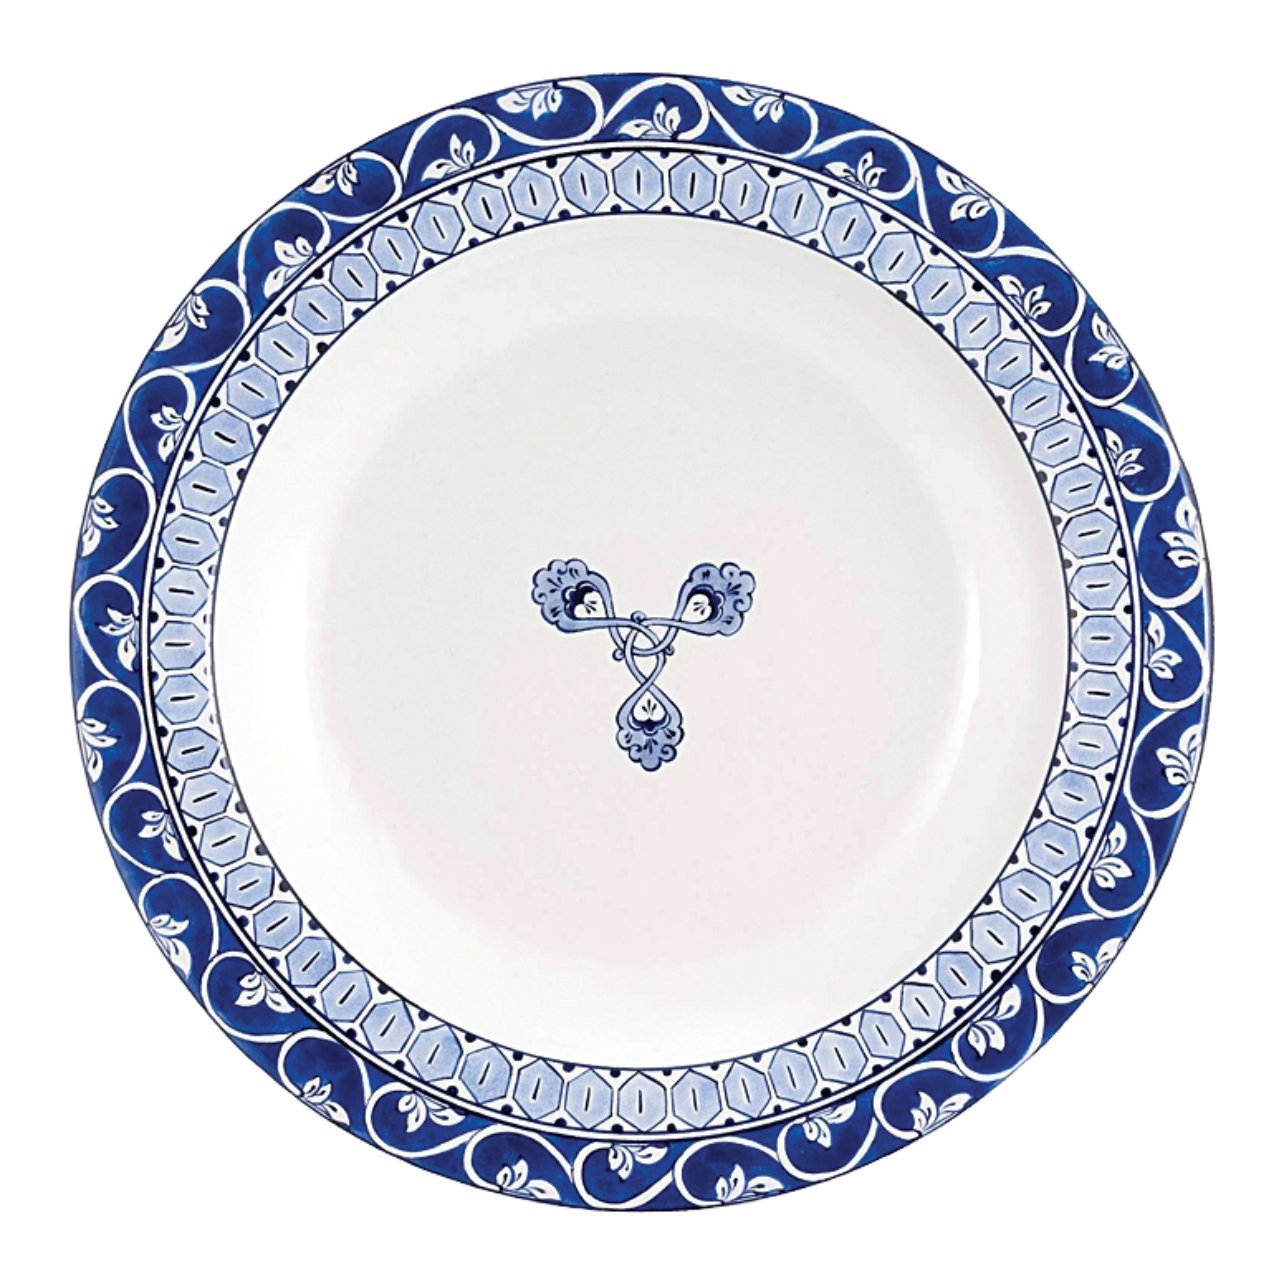 Haremlique Iznik serving plate with hand painted blue details